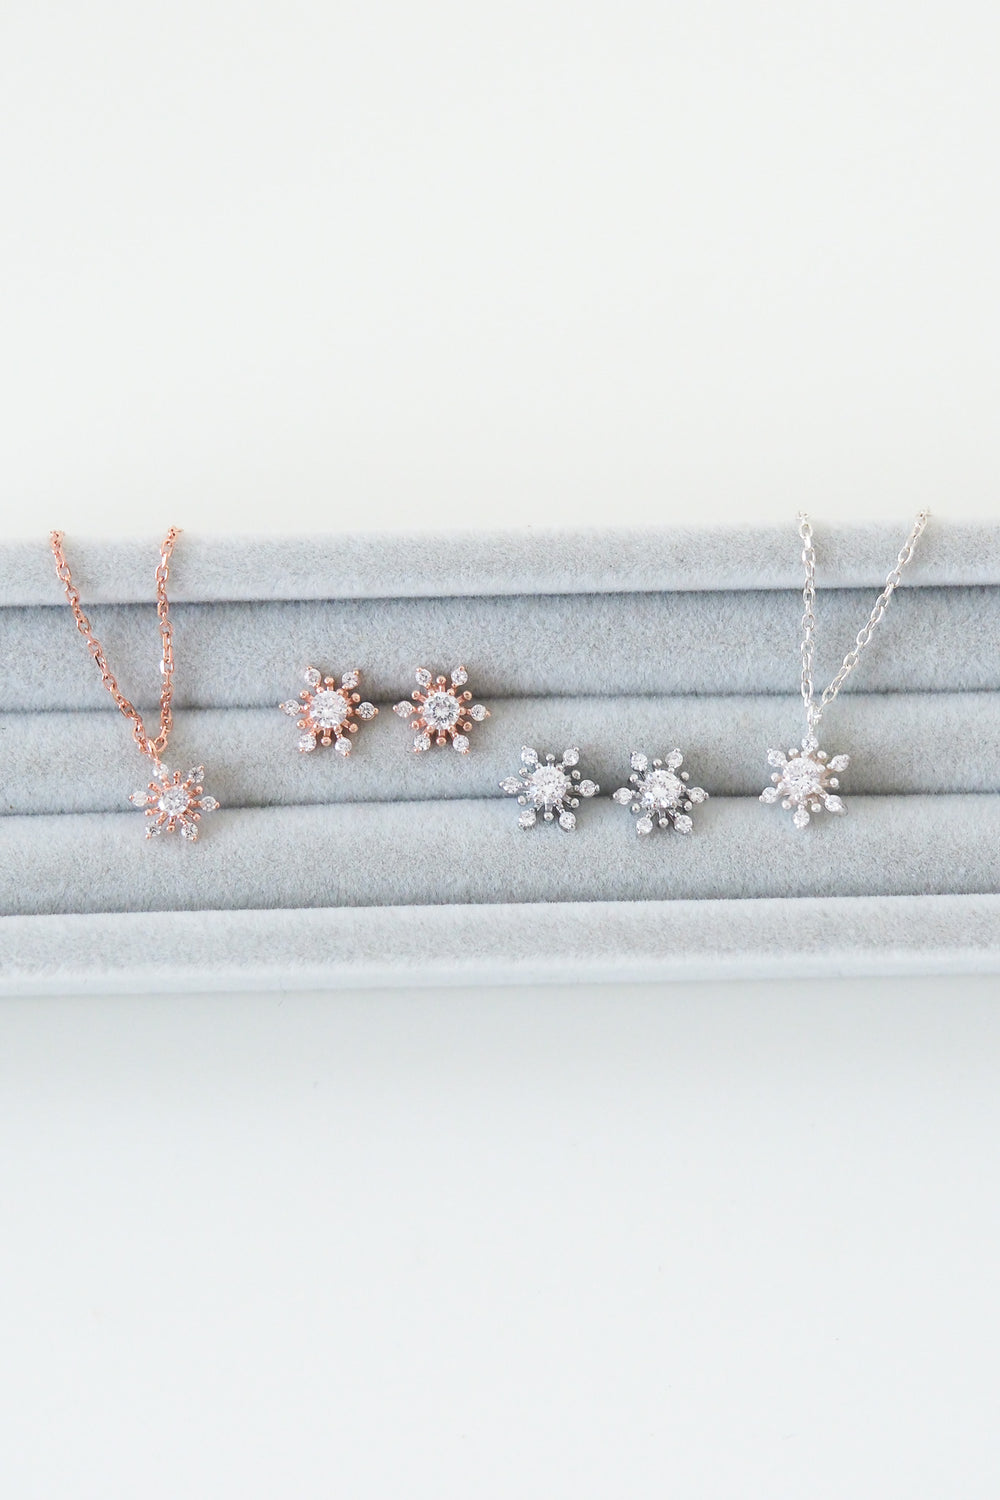 [XMAS] 23978 Frozen Snowflakes Earrings & Necklace